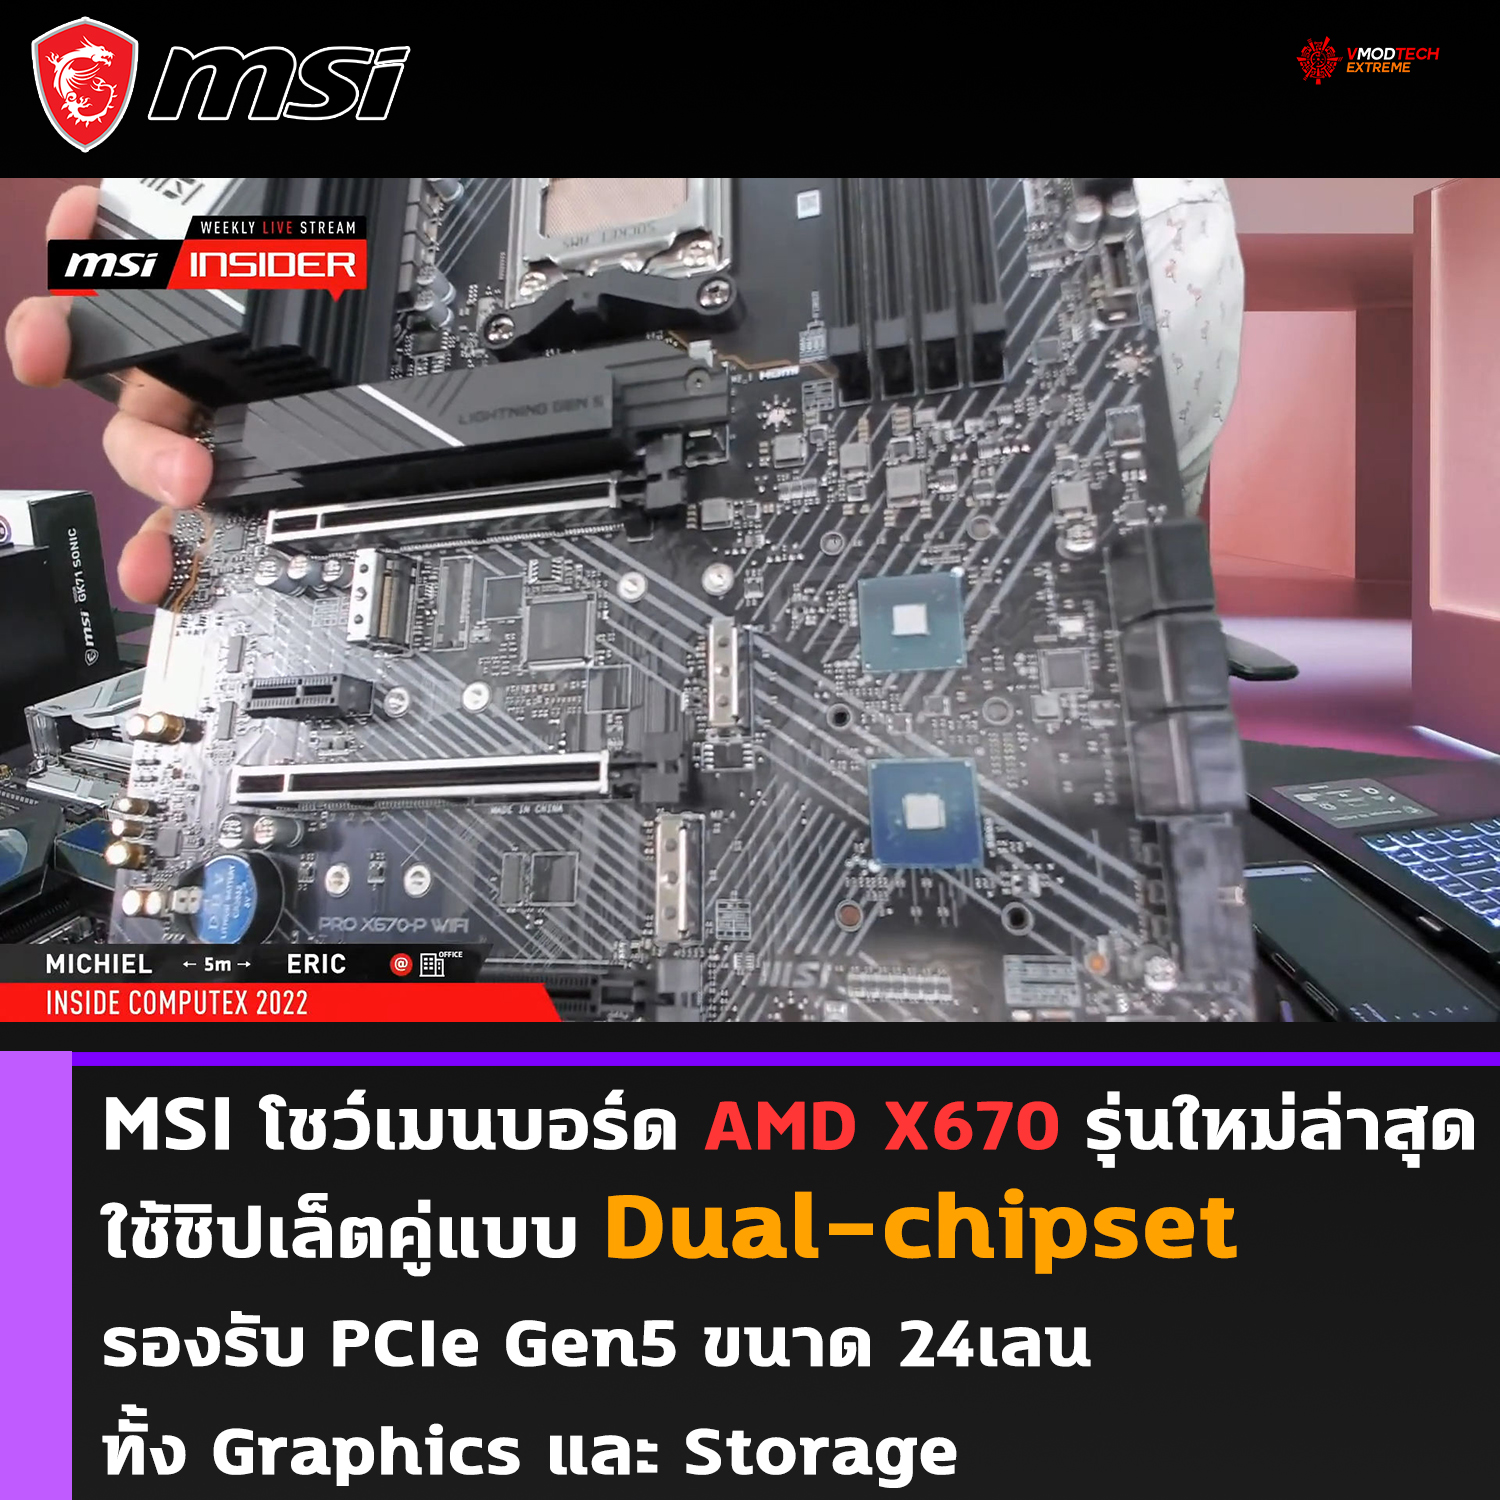 msi x670 dual chiset am5 MSI โชว์เมนบอร์ด AMD X670 รุ่นใหม่ล่าสุดใช้ชิปคู่แบบ Dual chipset ในการทำงาน